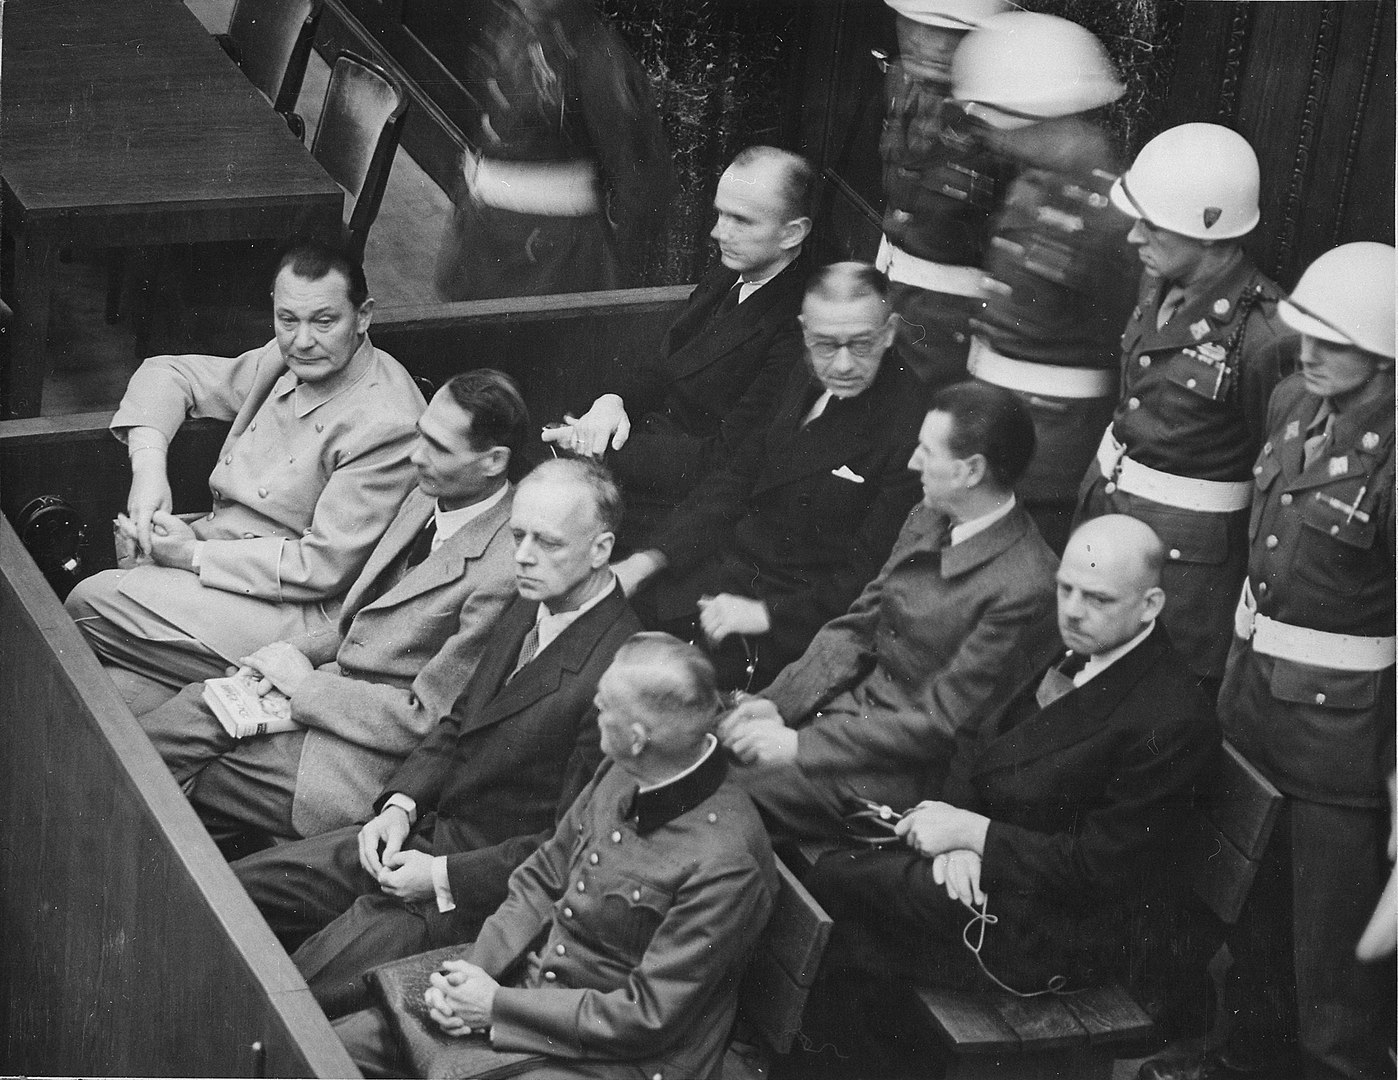 Nuremberg Trials remembered 75 years on